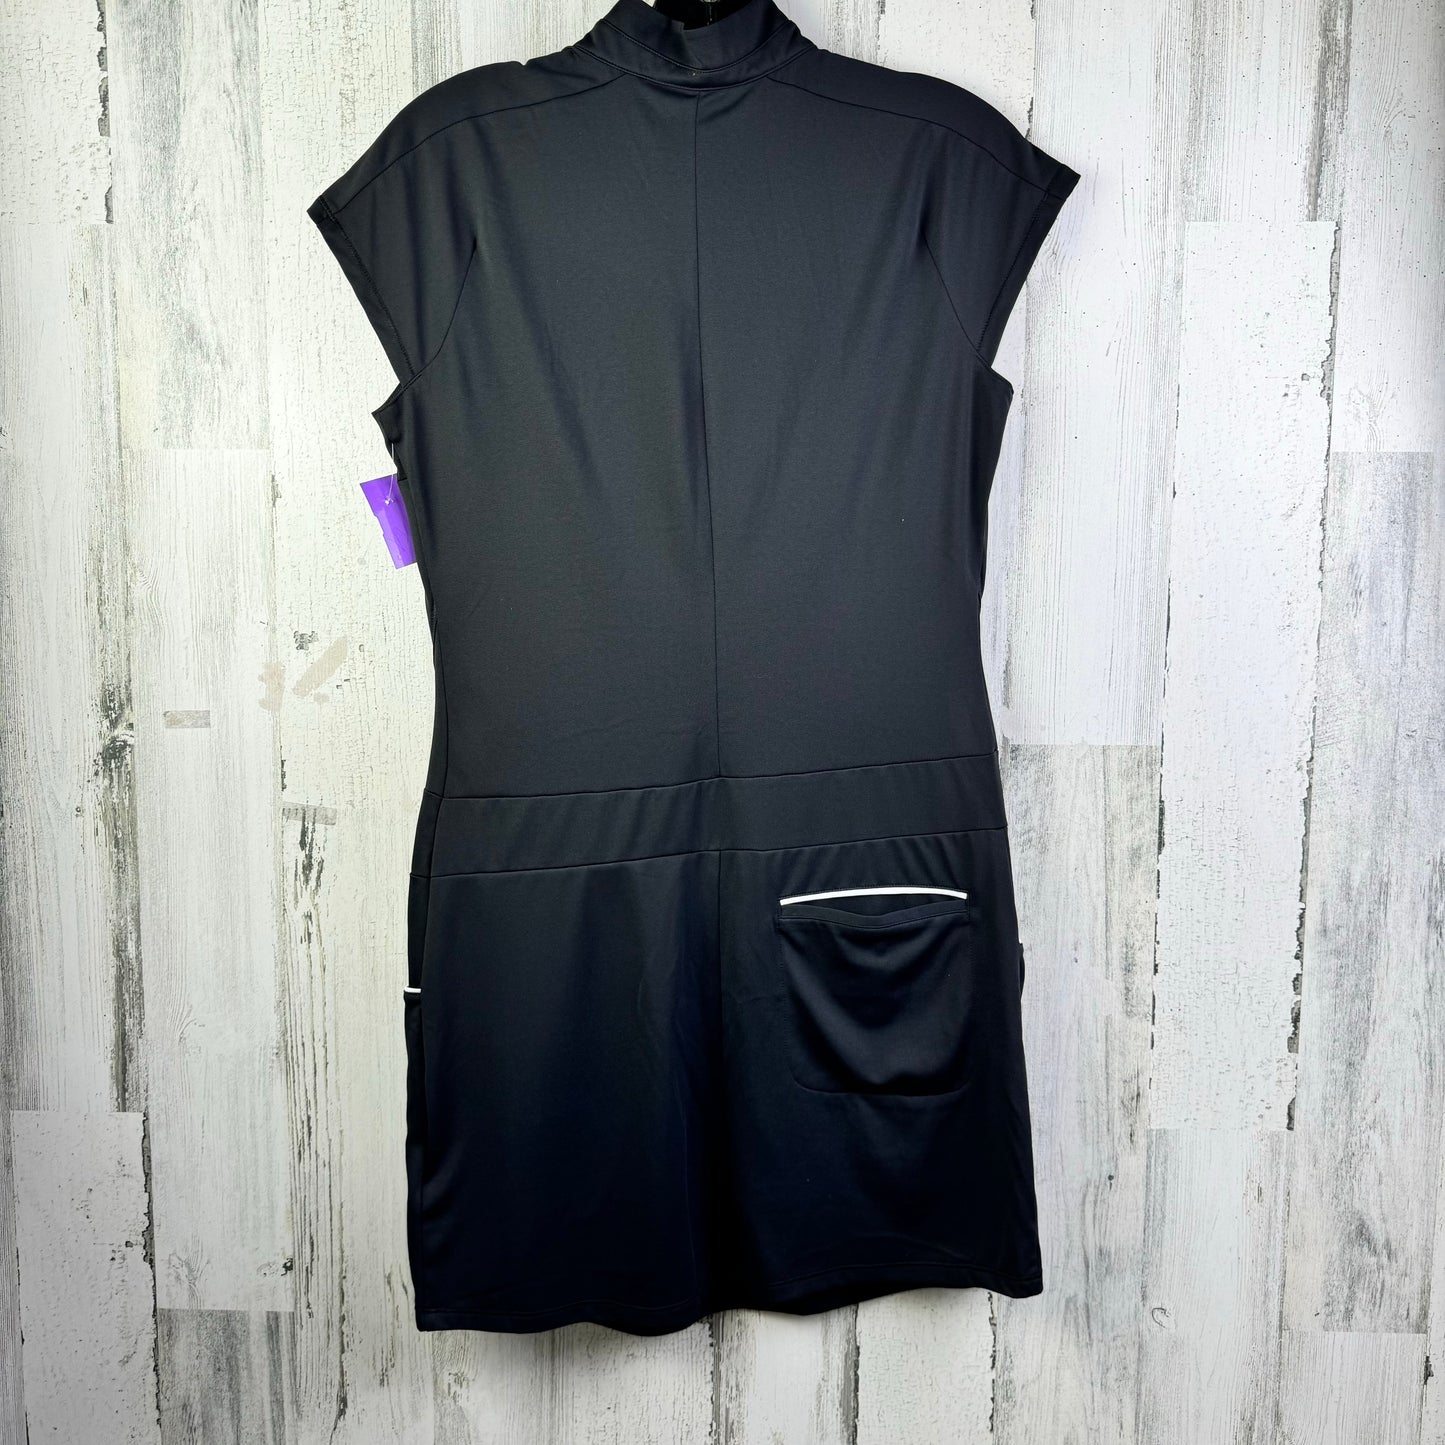 Black Athletic Dress Adidas, Size S